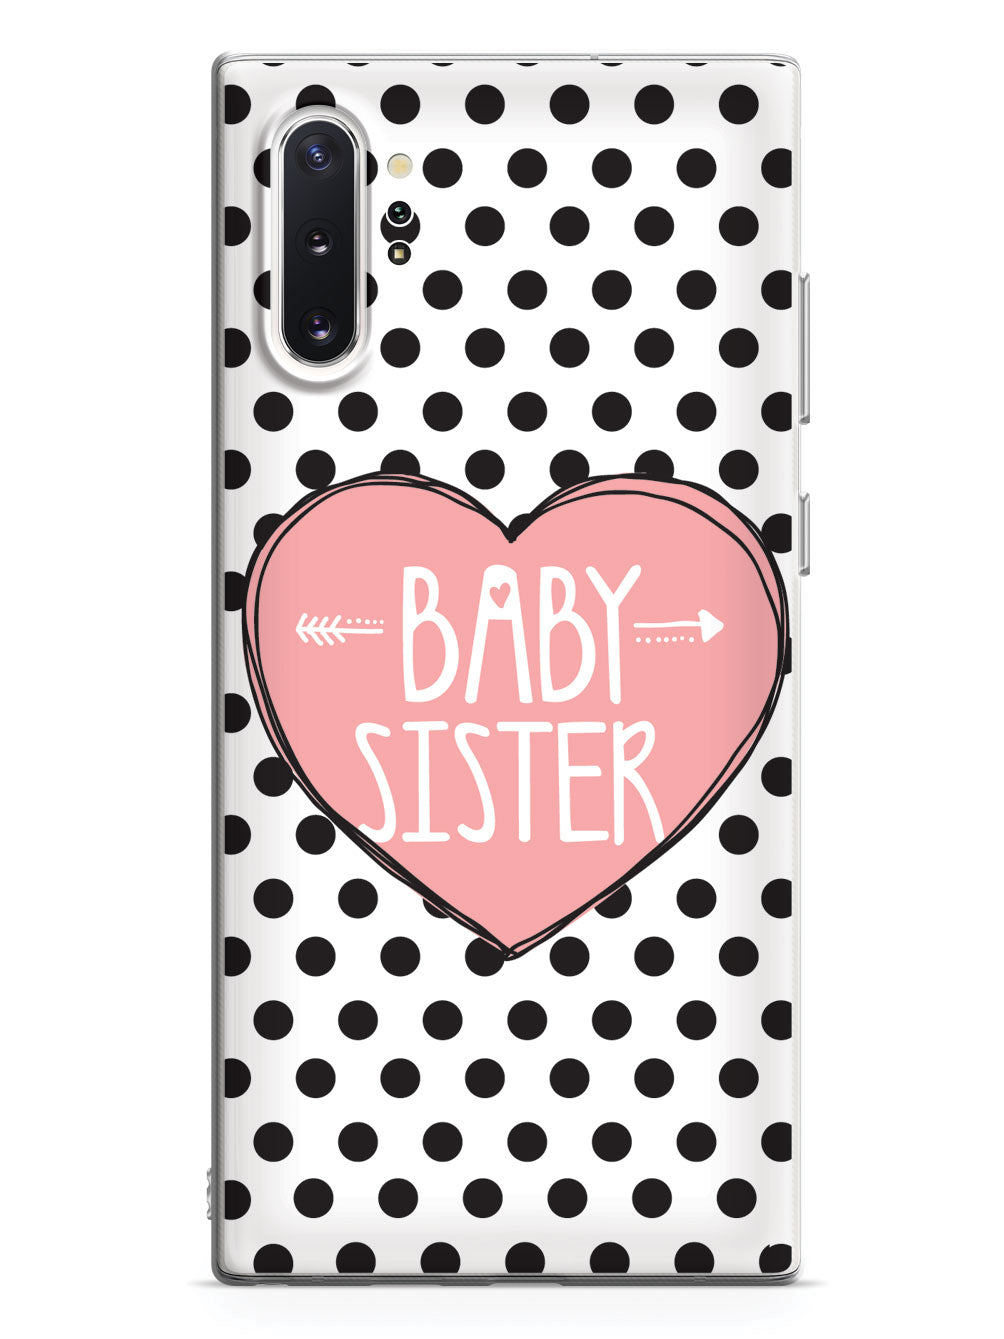 Sisterly Love - Baby Sister - Polka Dots Case